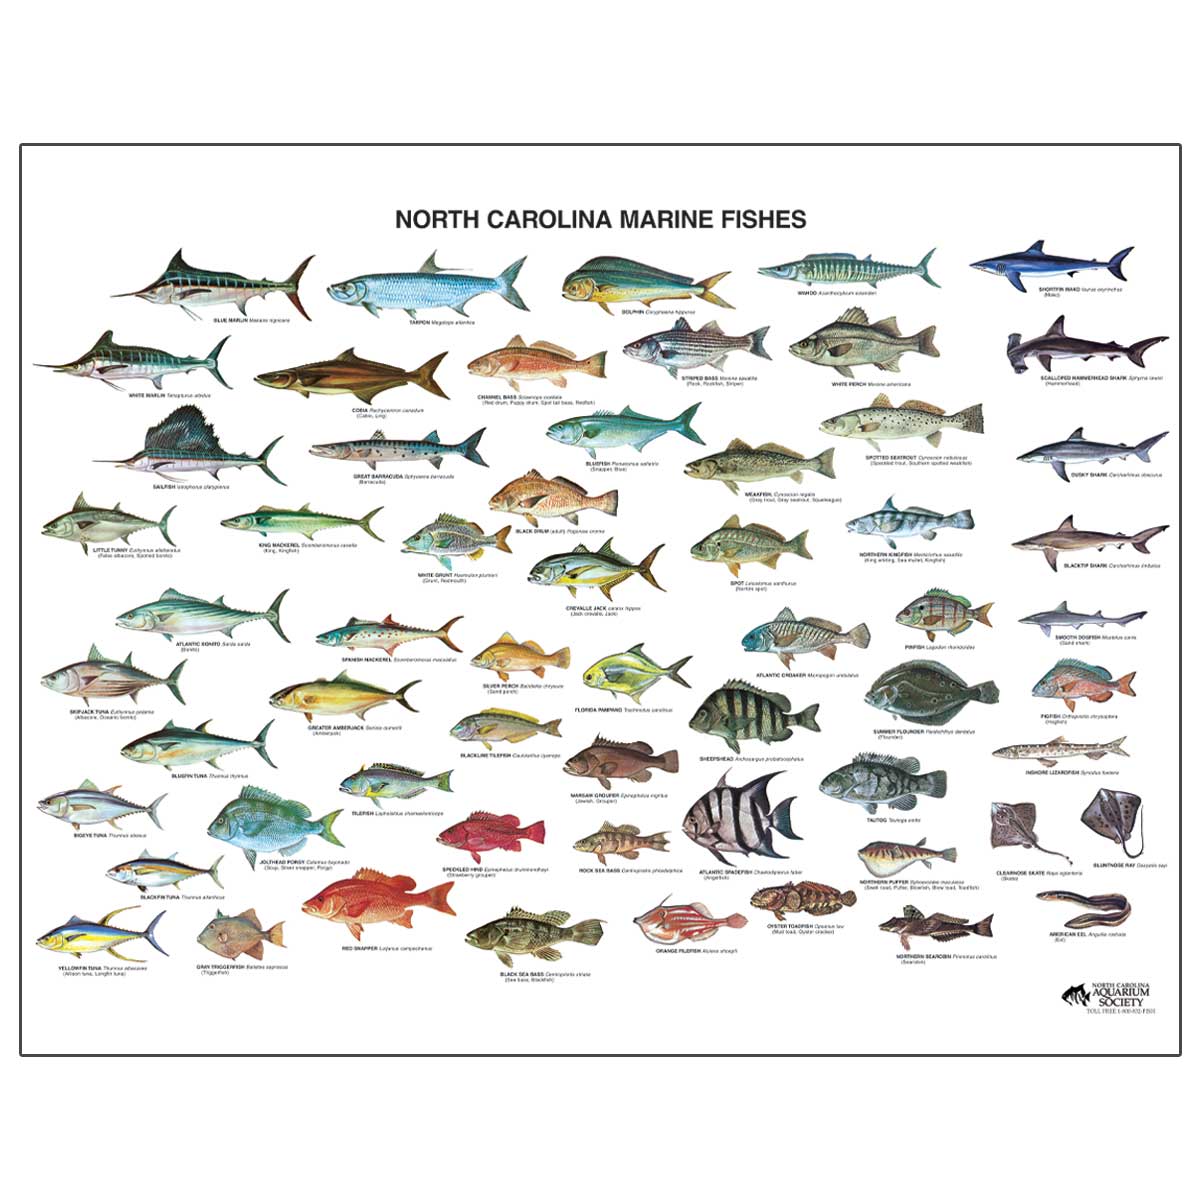 https://ncaquariumsociety.com/wp-content/uploads/2020/05/nca-nc-marine-fish-poster-web-2.jpg